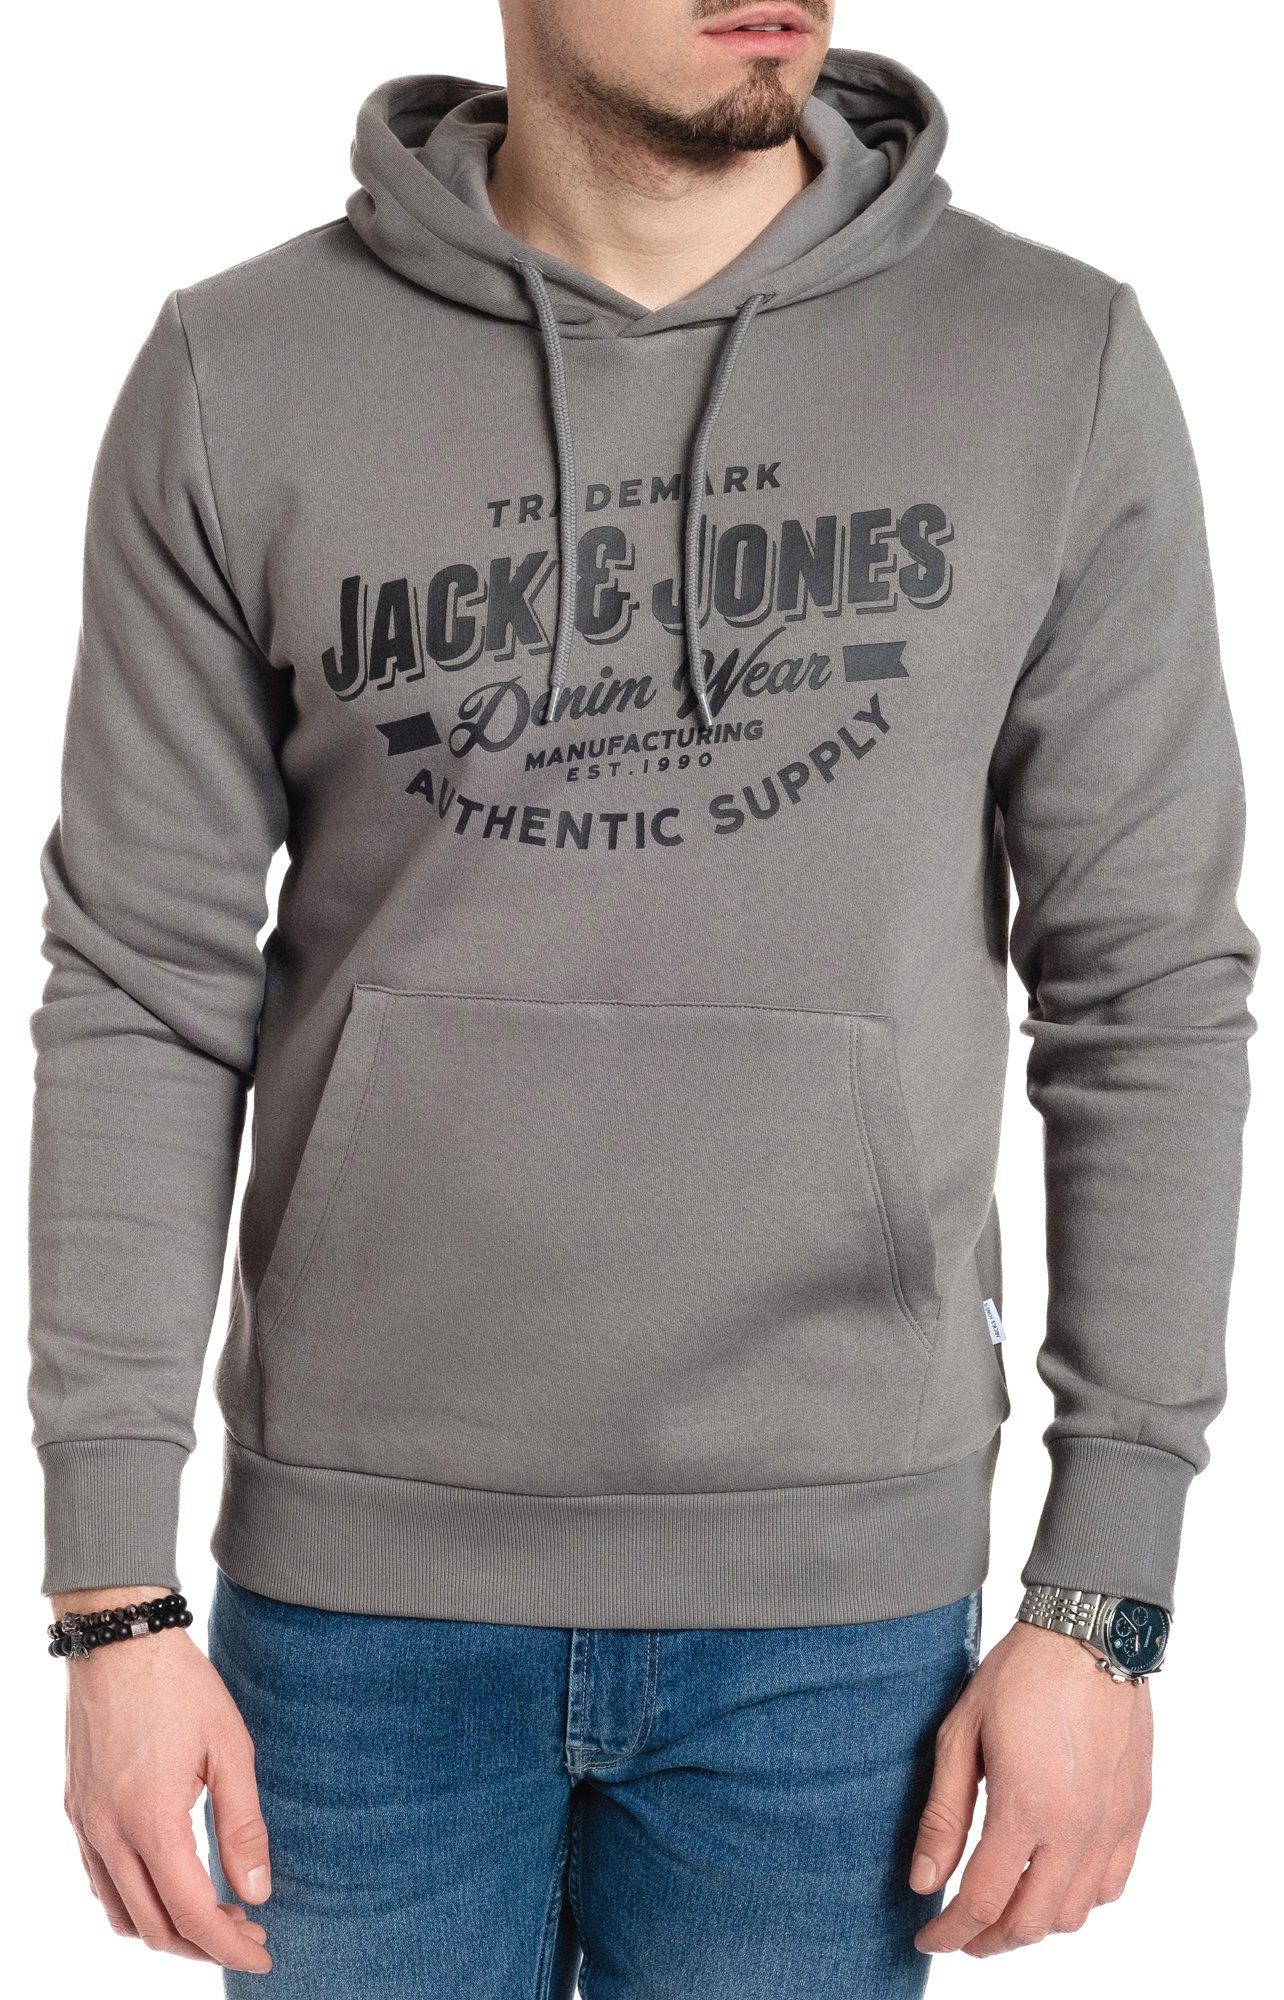 Jack & Jones unifarben, Kängurutasche, Kapuzensweatshirt mit Sedona-Black-JJ mit Kapuze mit Logodruck